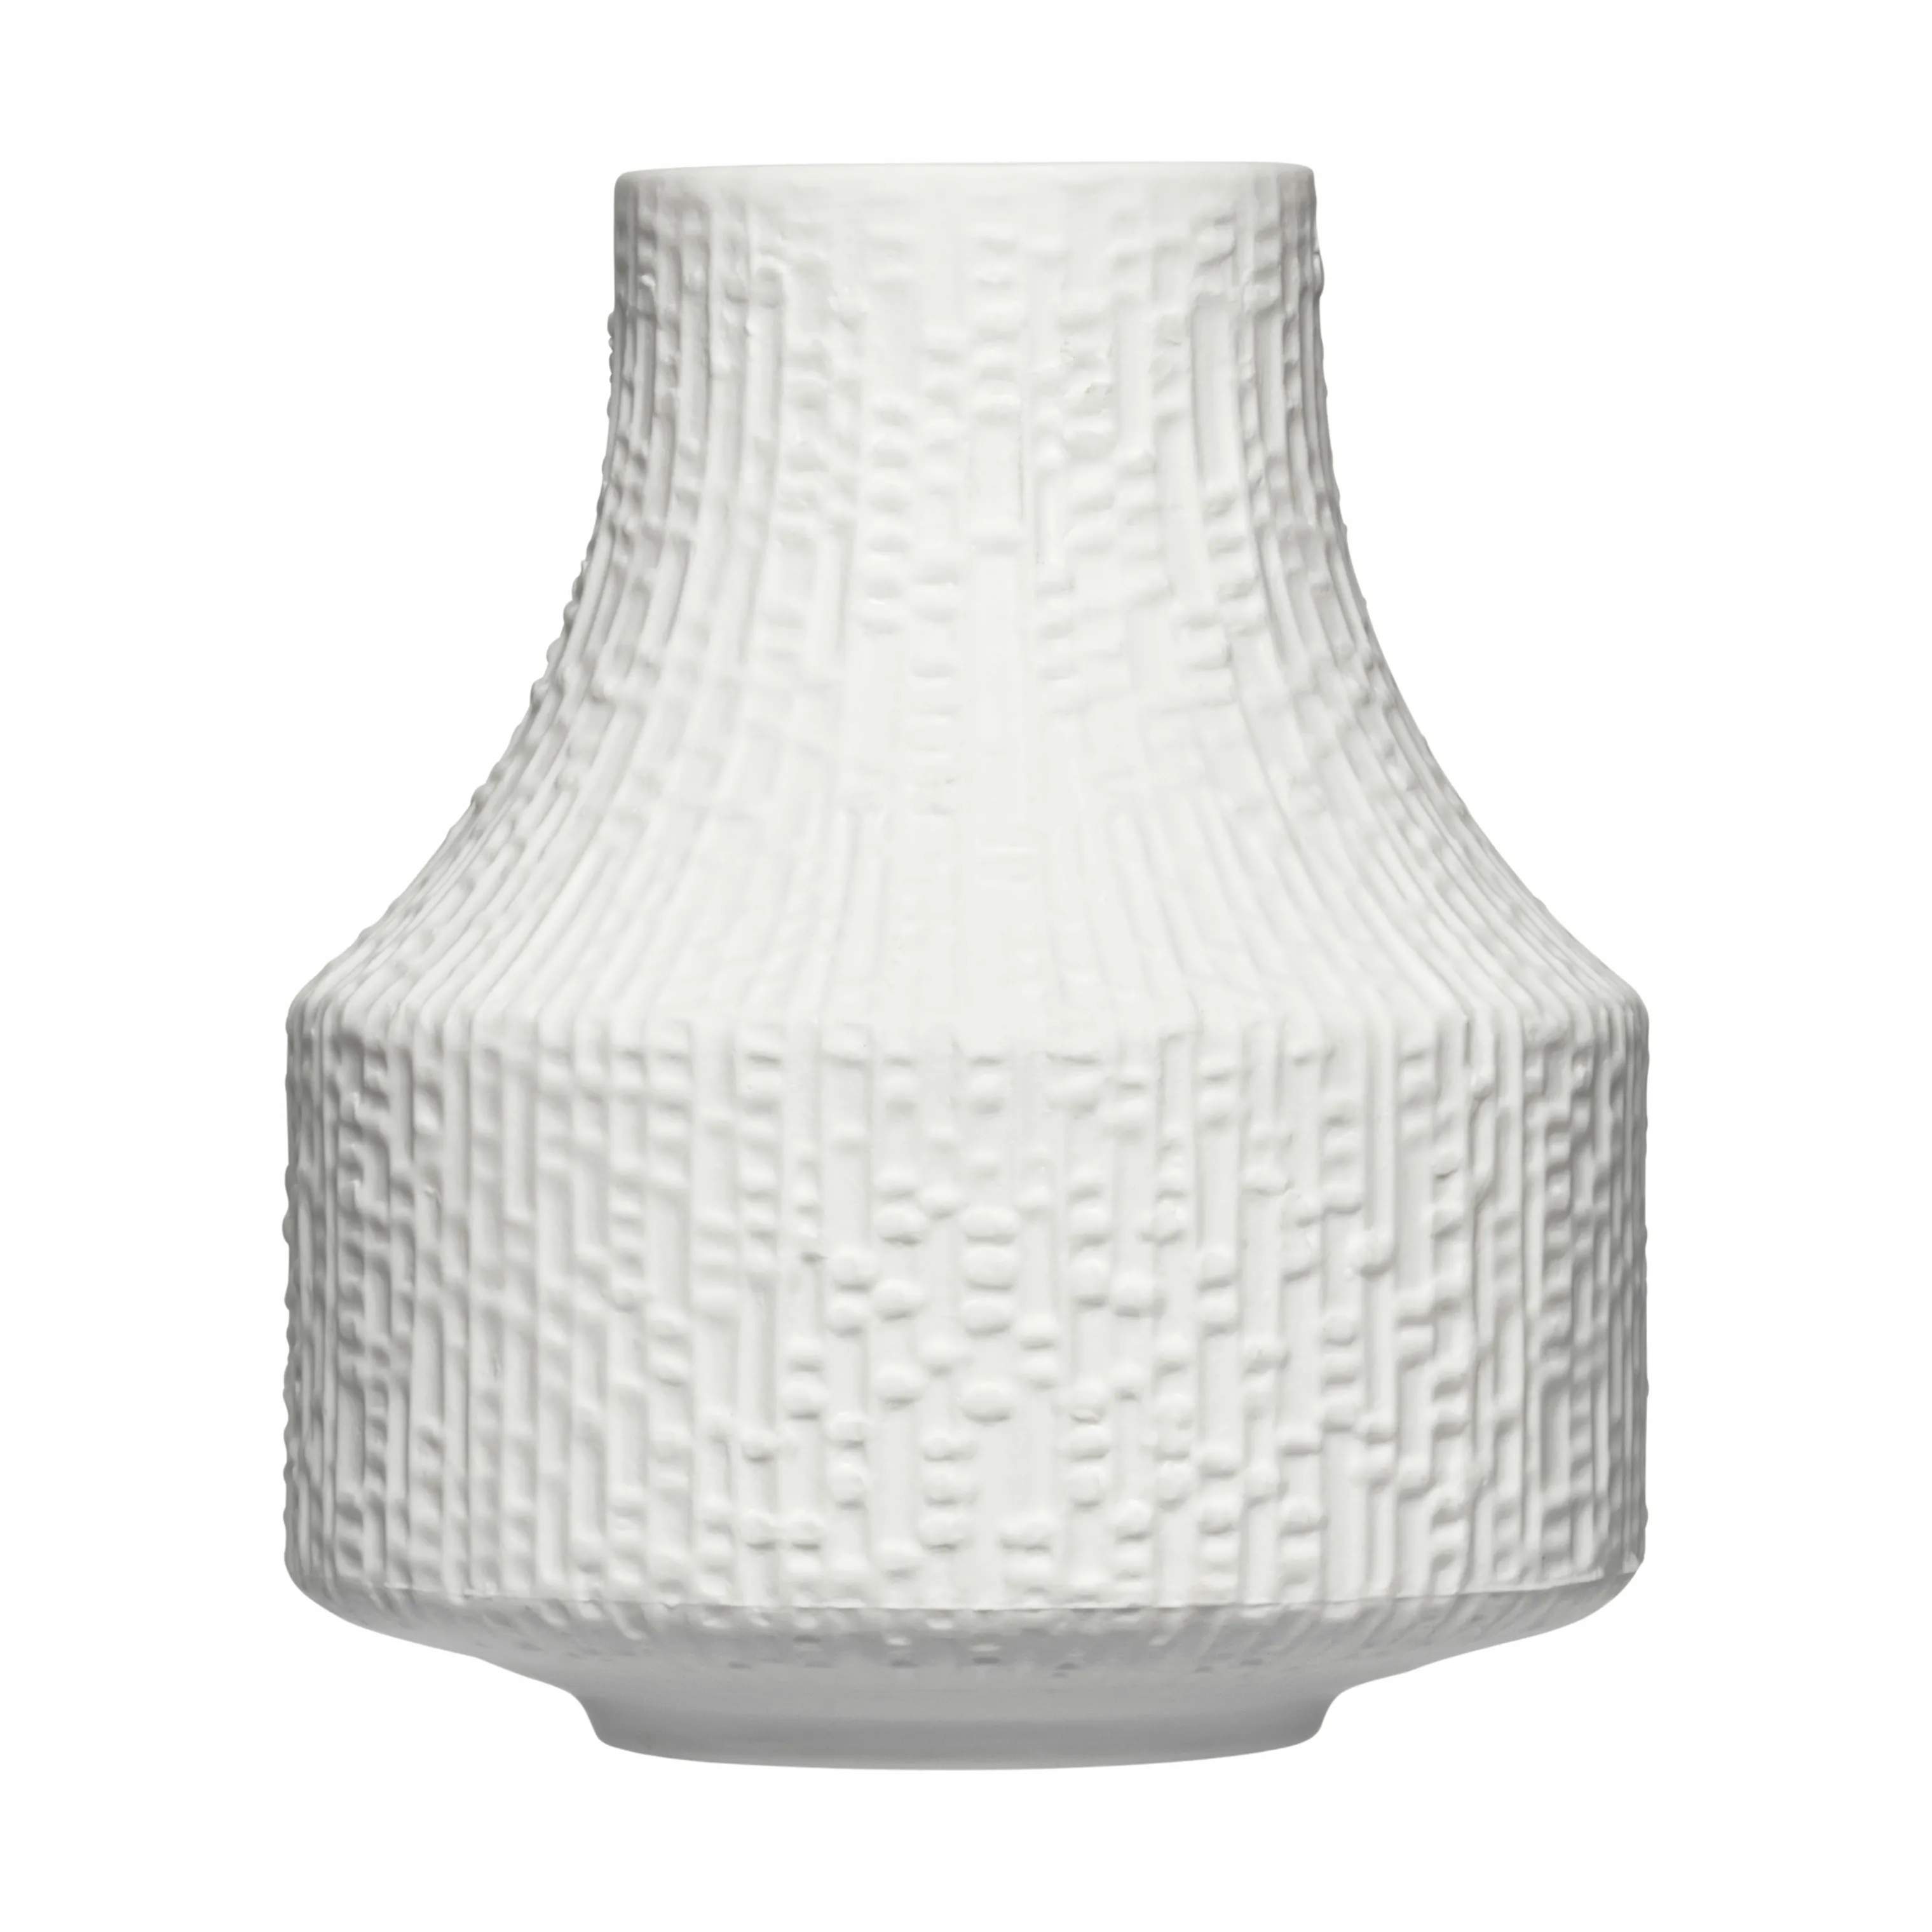 Ultima Thule Vase, hvid, large